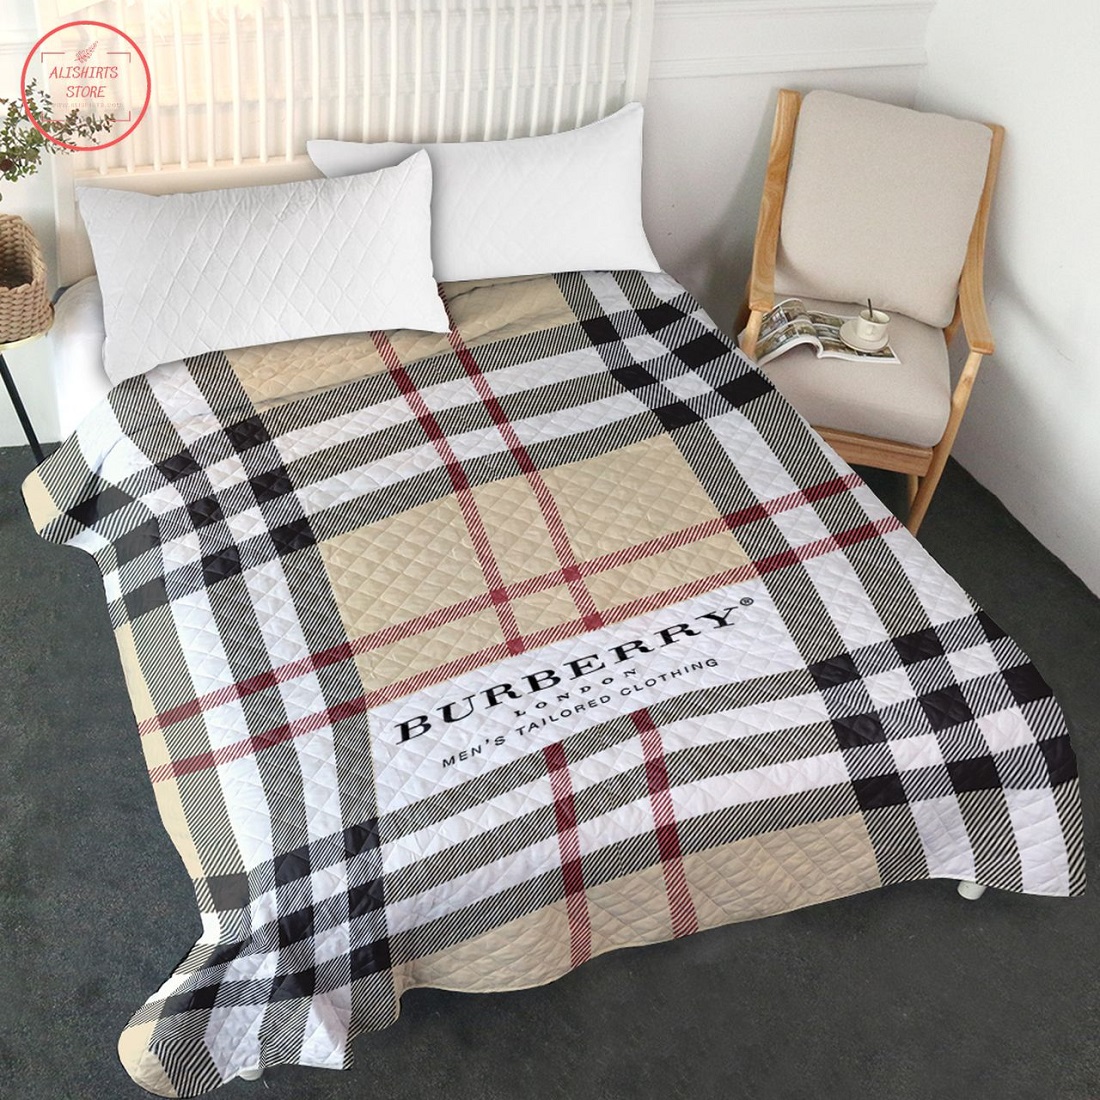 Burberry London Luxury Brand Quilt Blanket